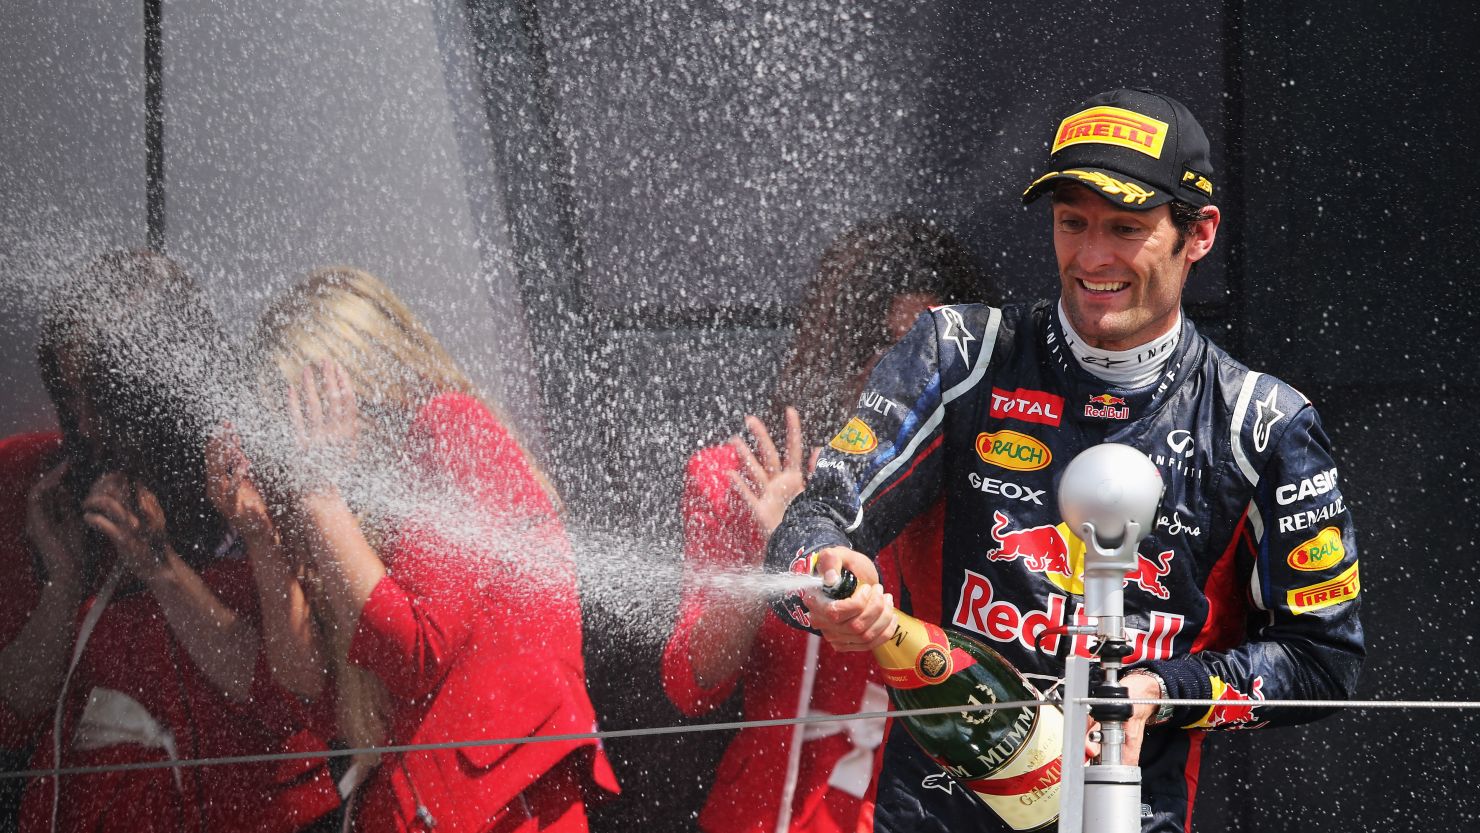 Red Bull's Australian driver Mark Webber celebrates after winning the British Grand Prix at Silverstone